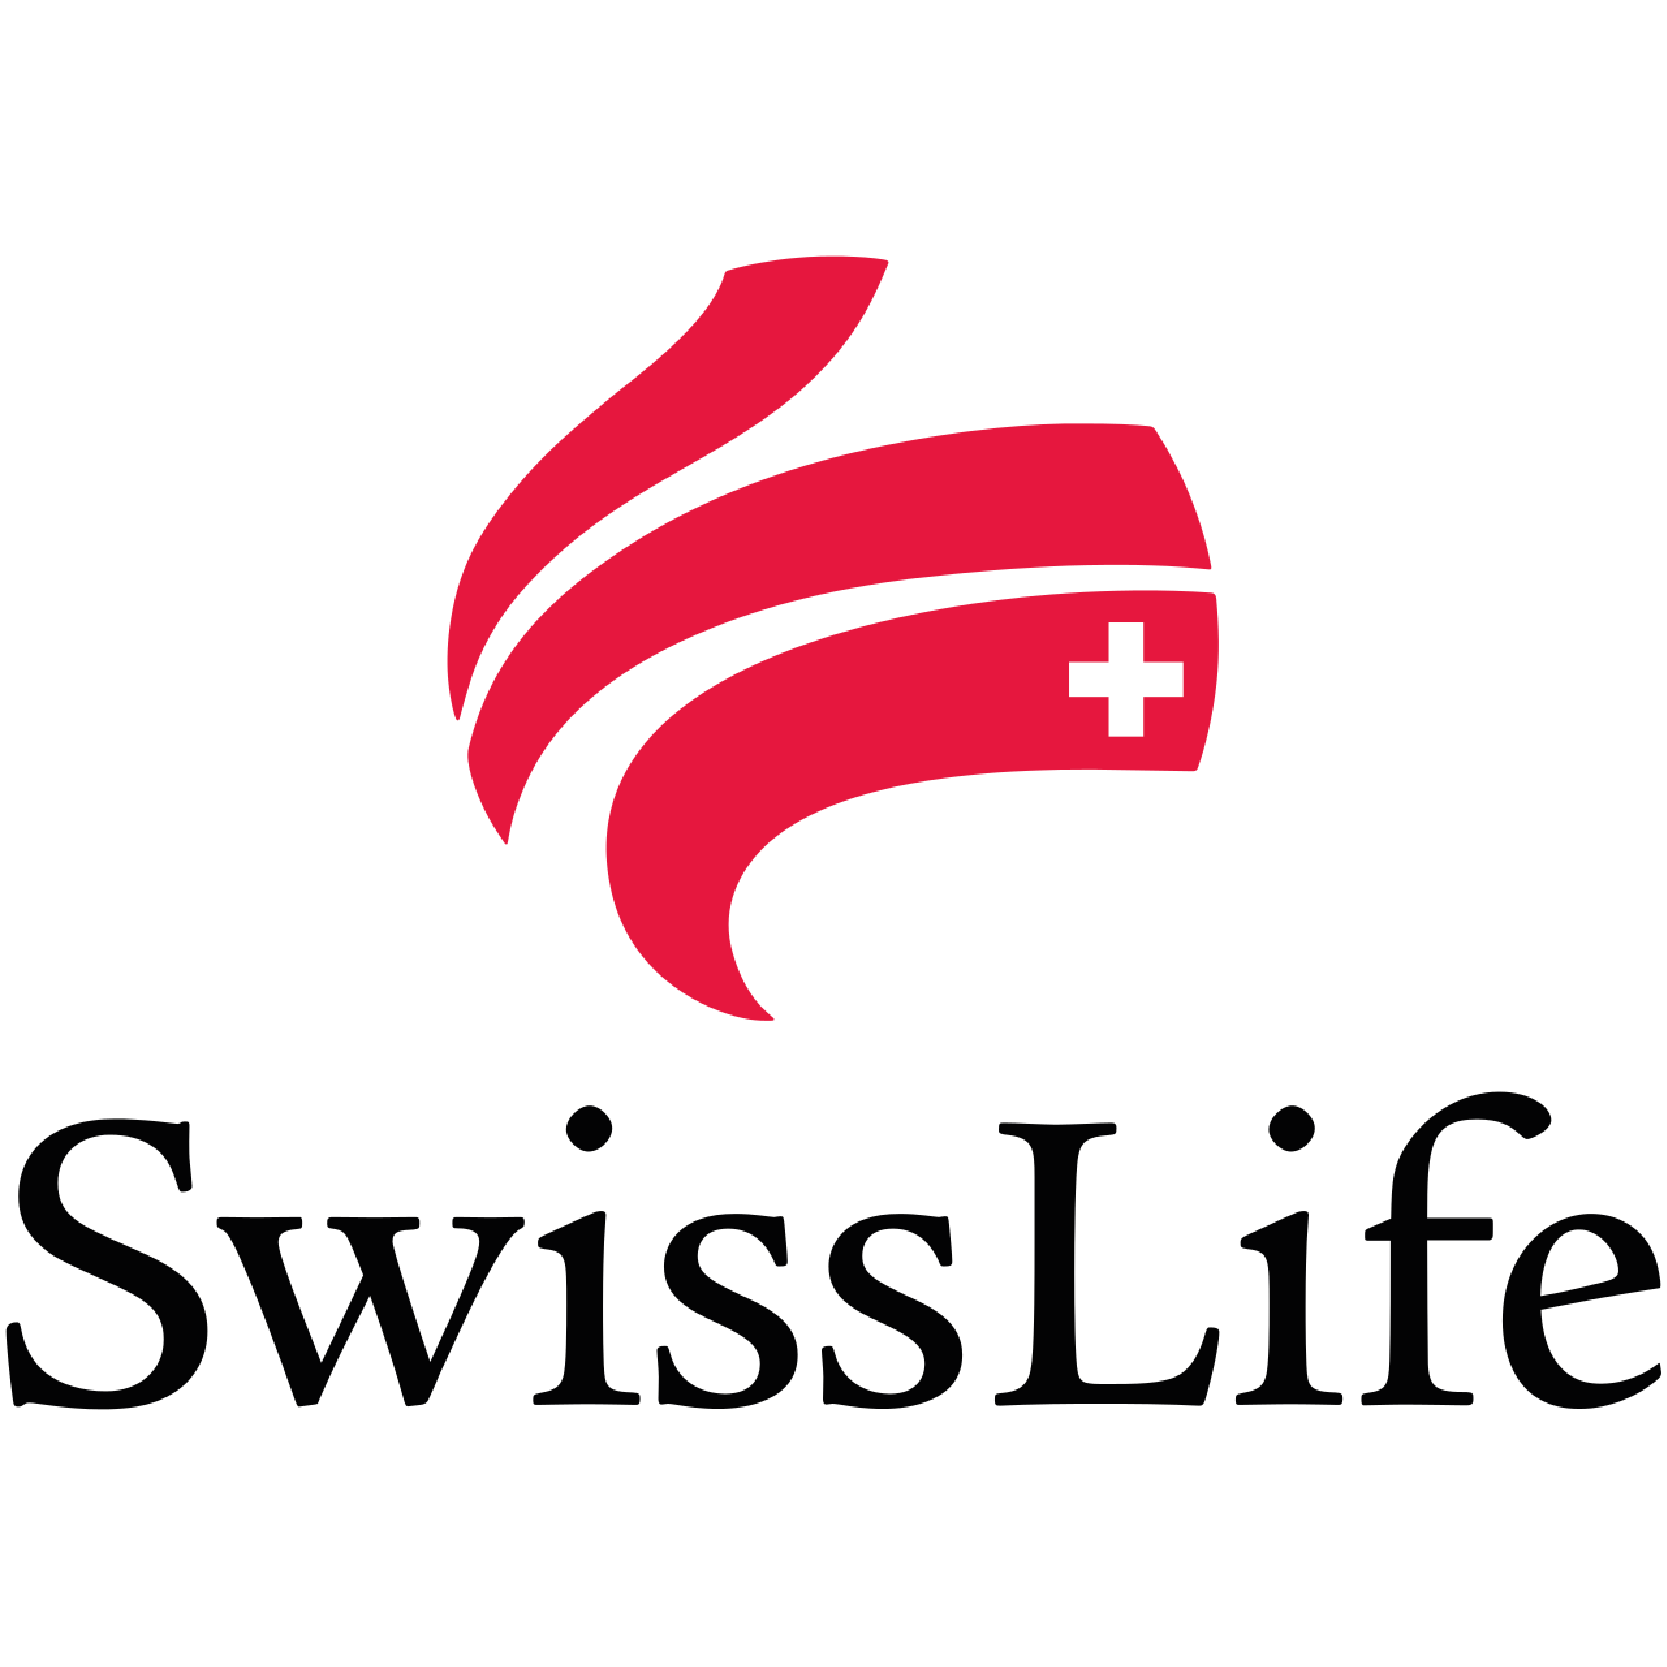 SwissLife logo